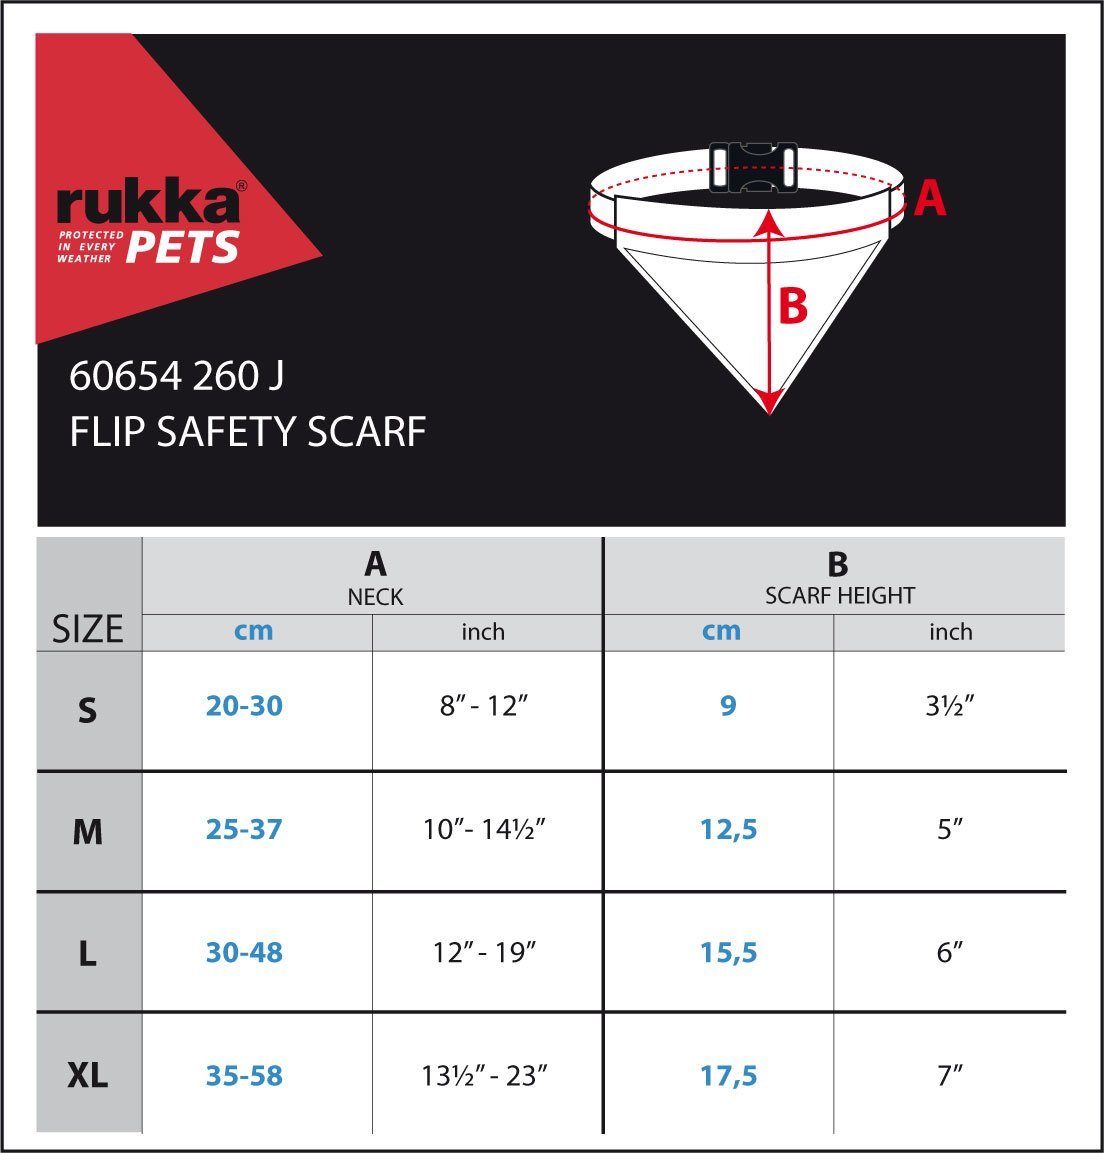 Rukka Pets - Flip Safety Scarf Size Chart